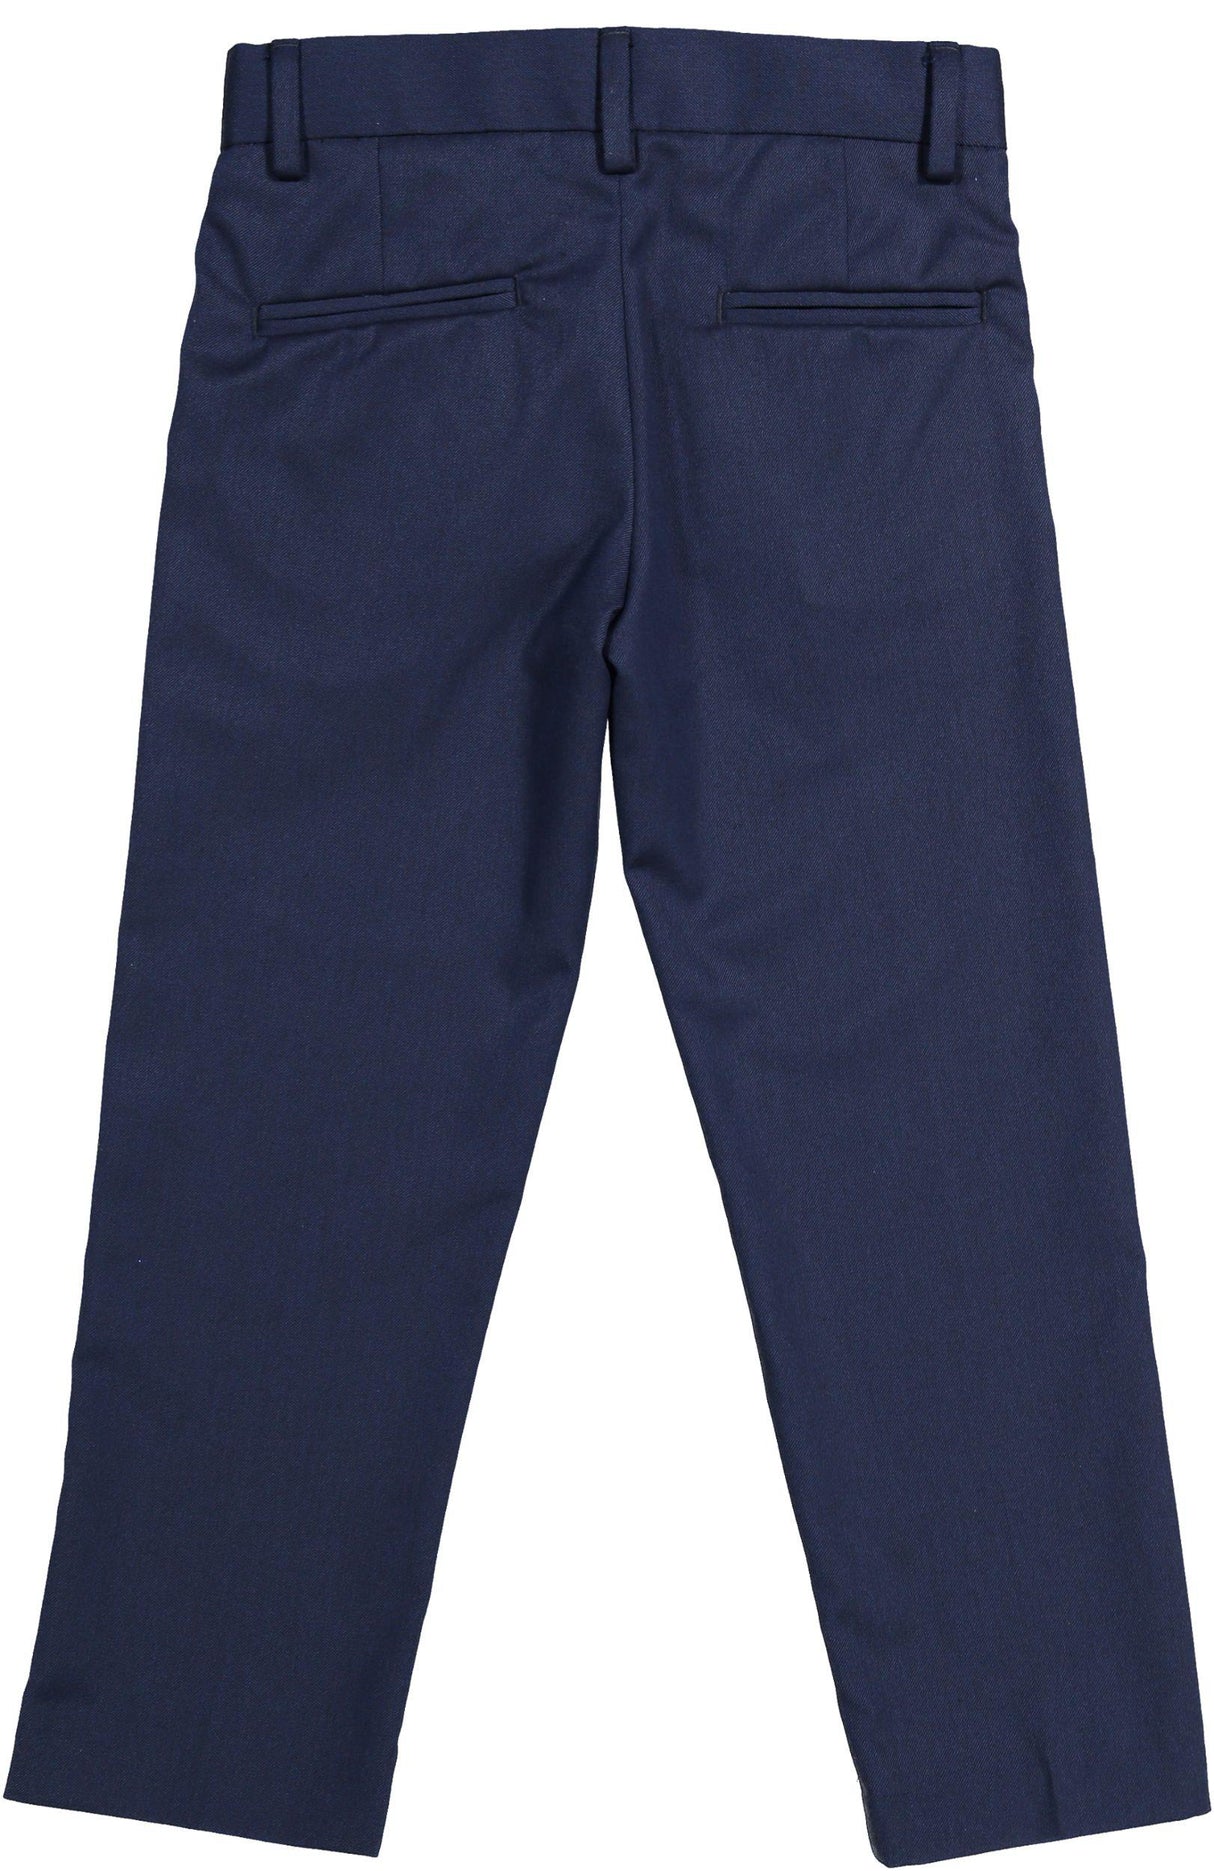 Leo & Zachary Boys Adjustable Waist Slim Fit Dress Pants - LZ-504/508